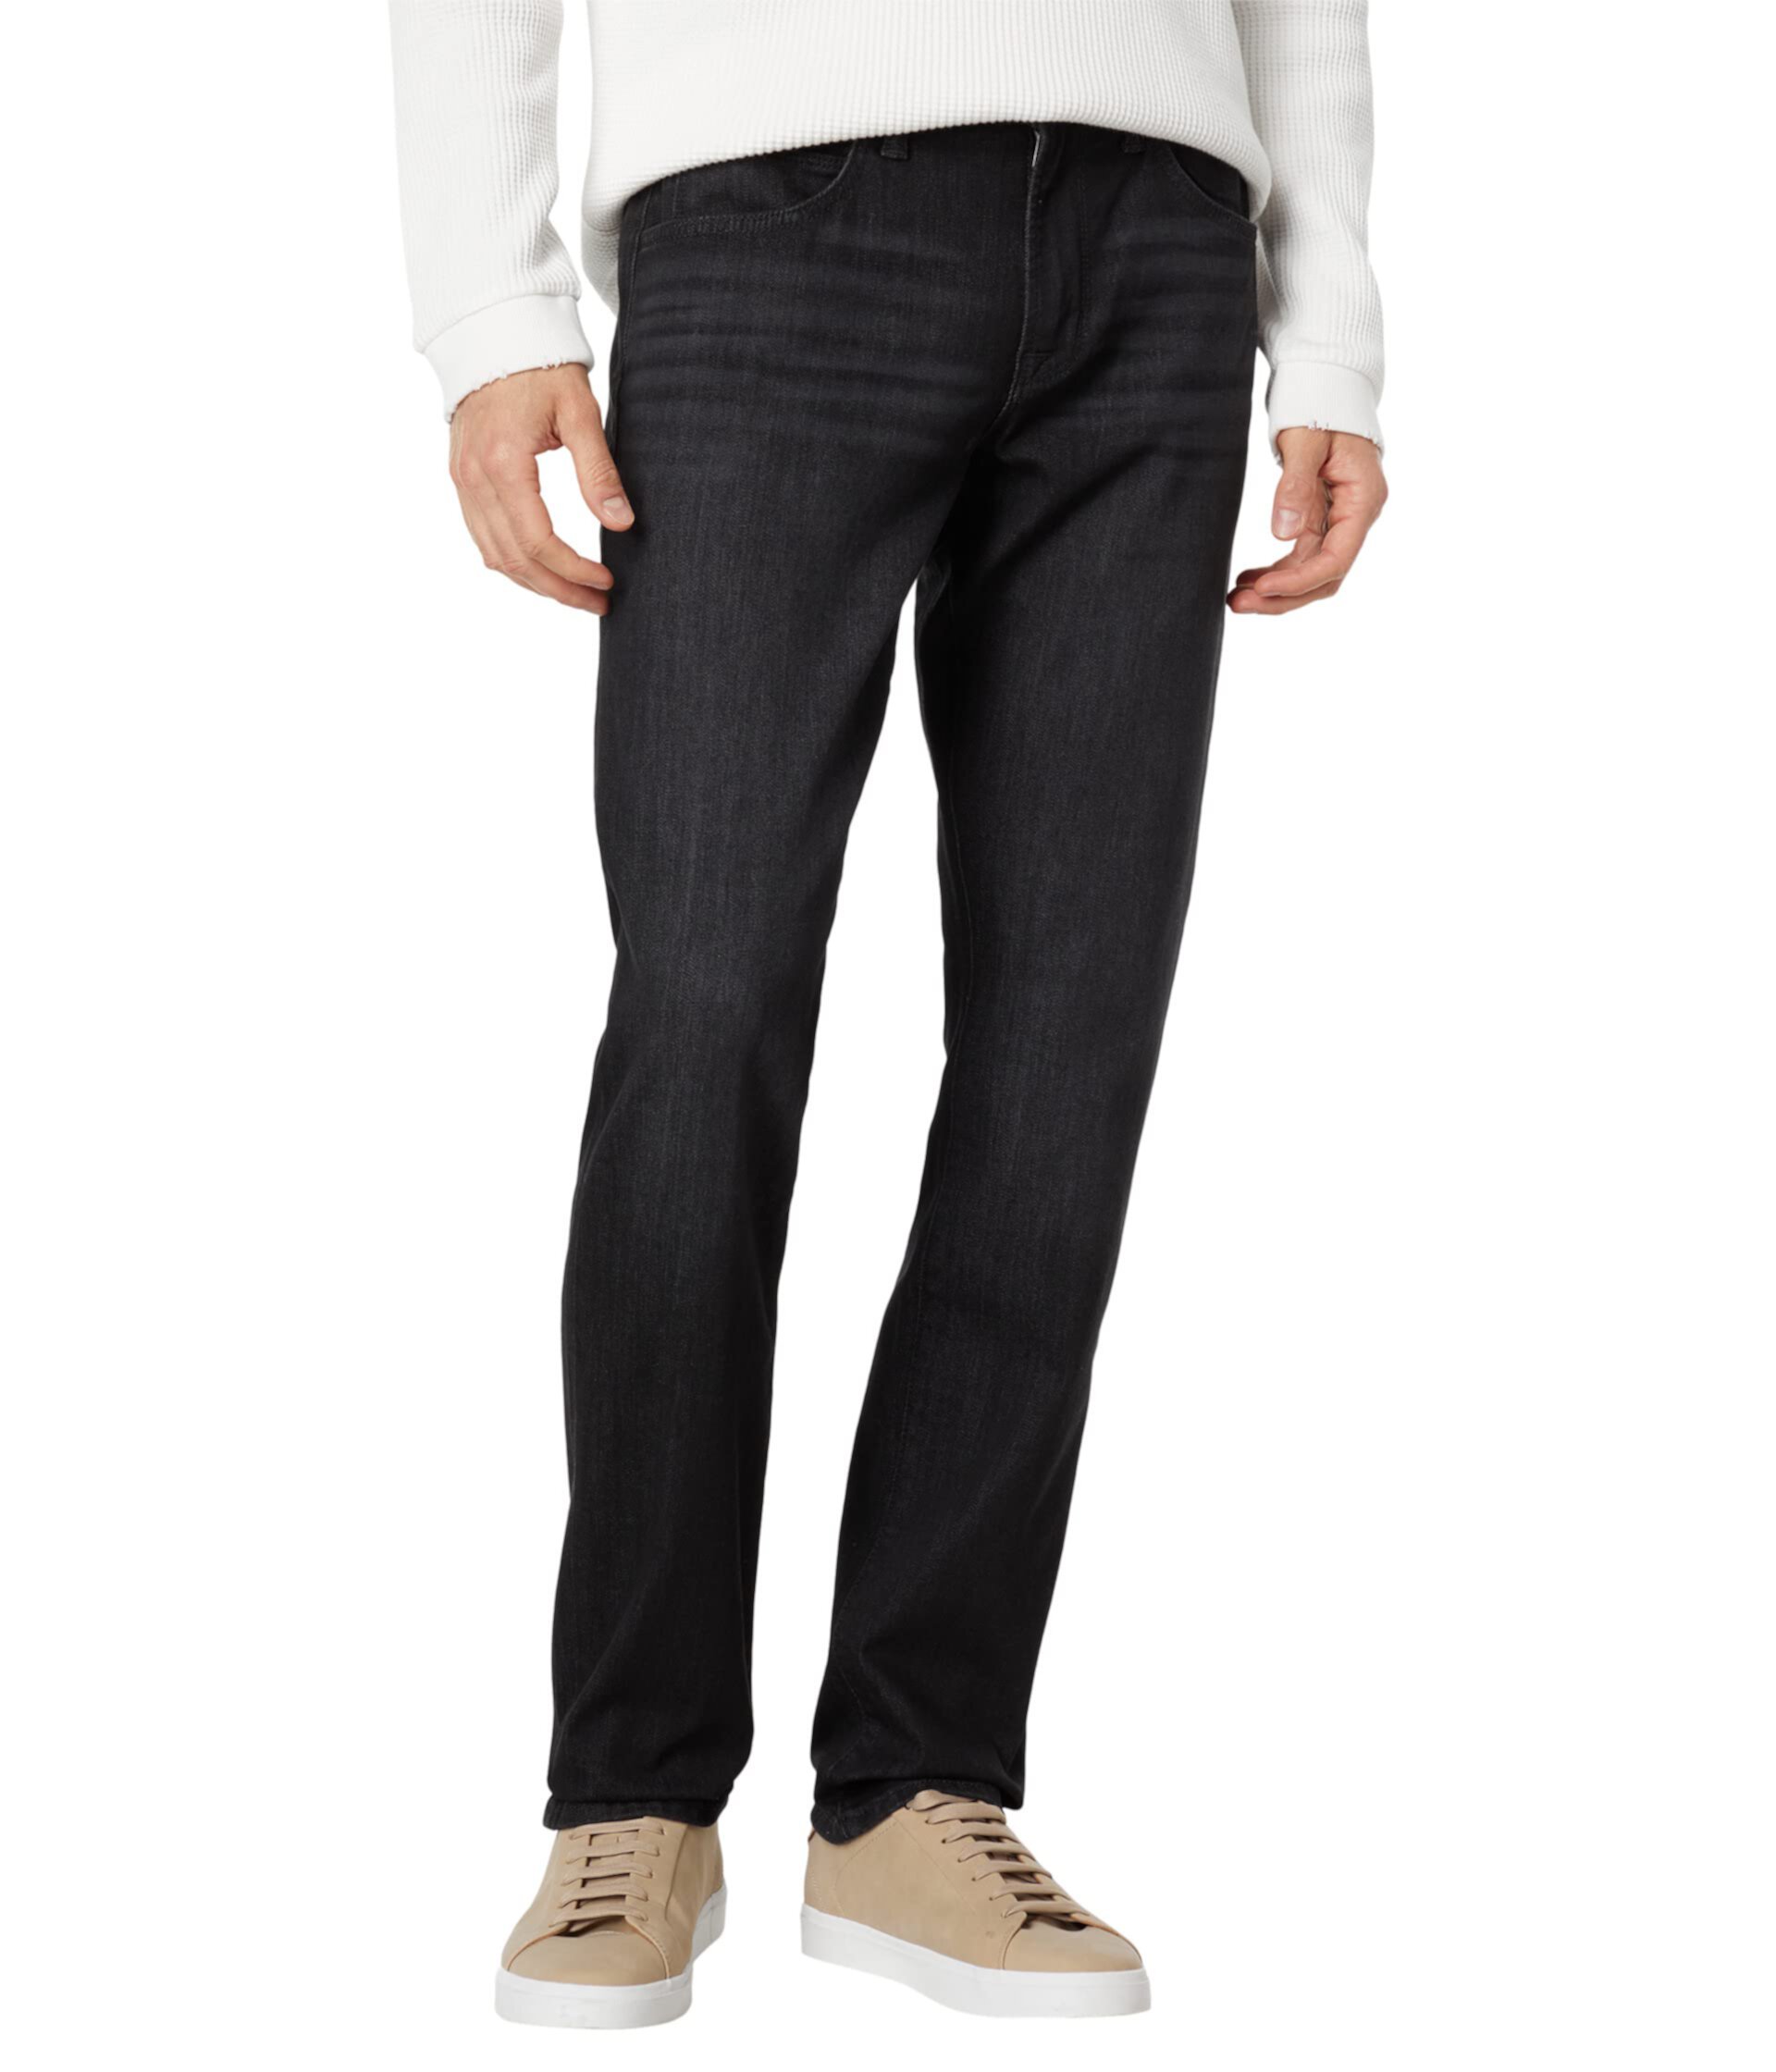 Узкие прямые джинсы Blake цвета Fiorello Hudson Jeans